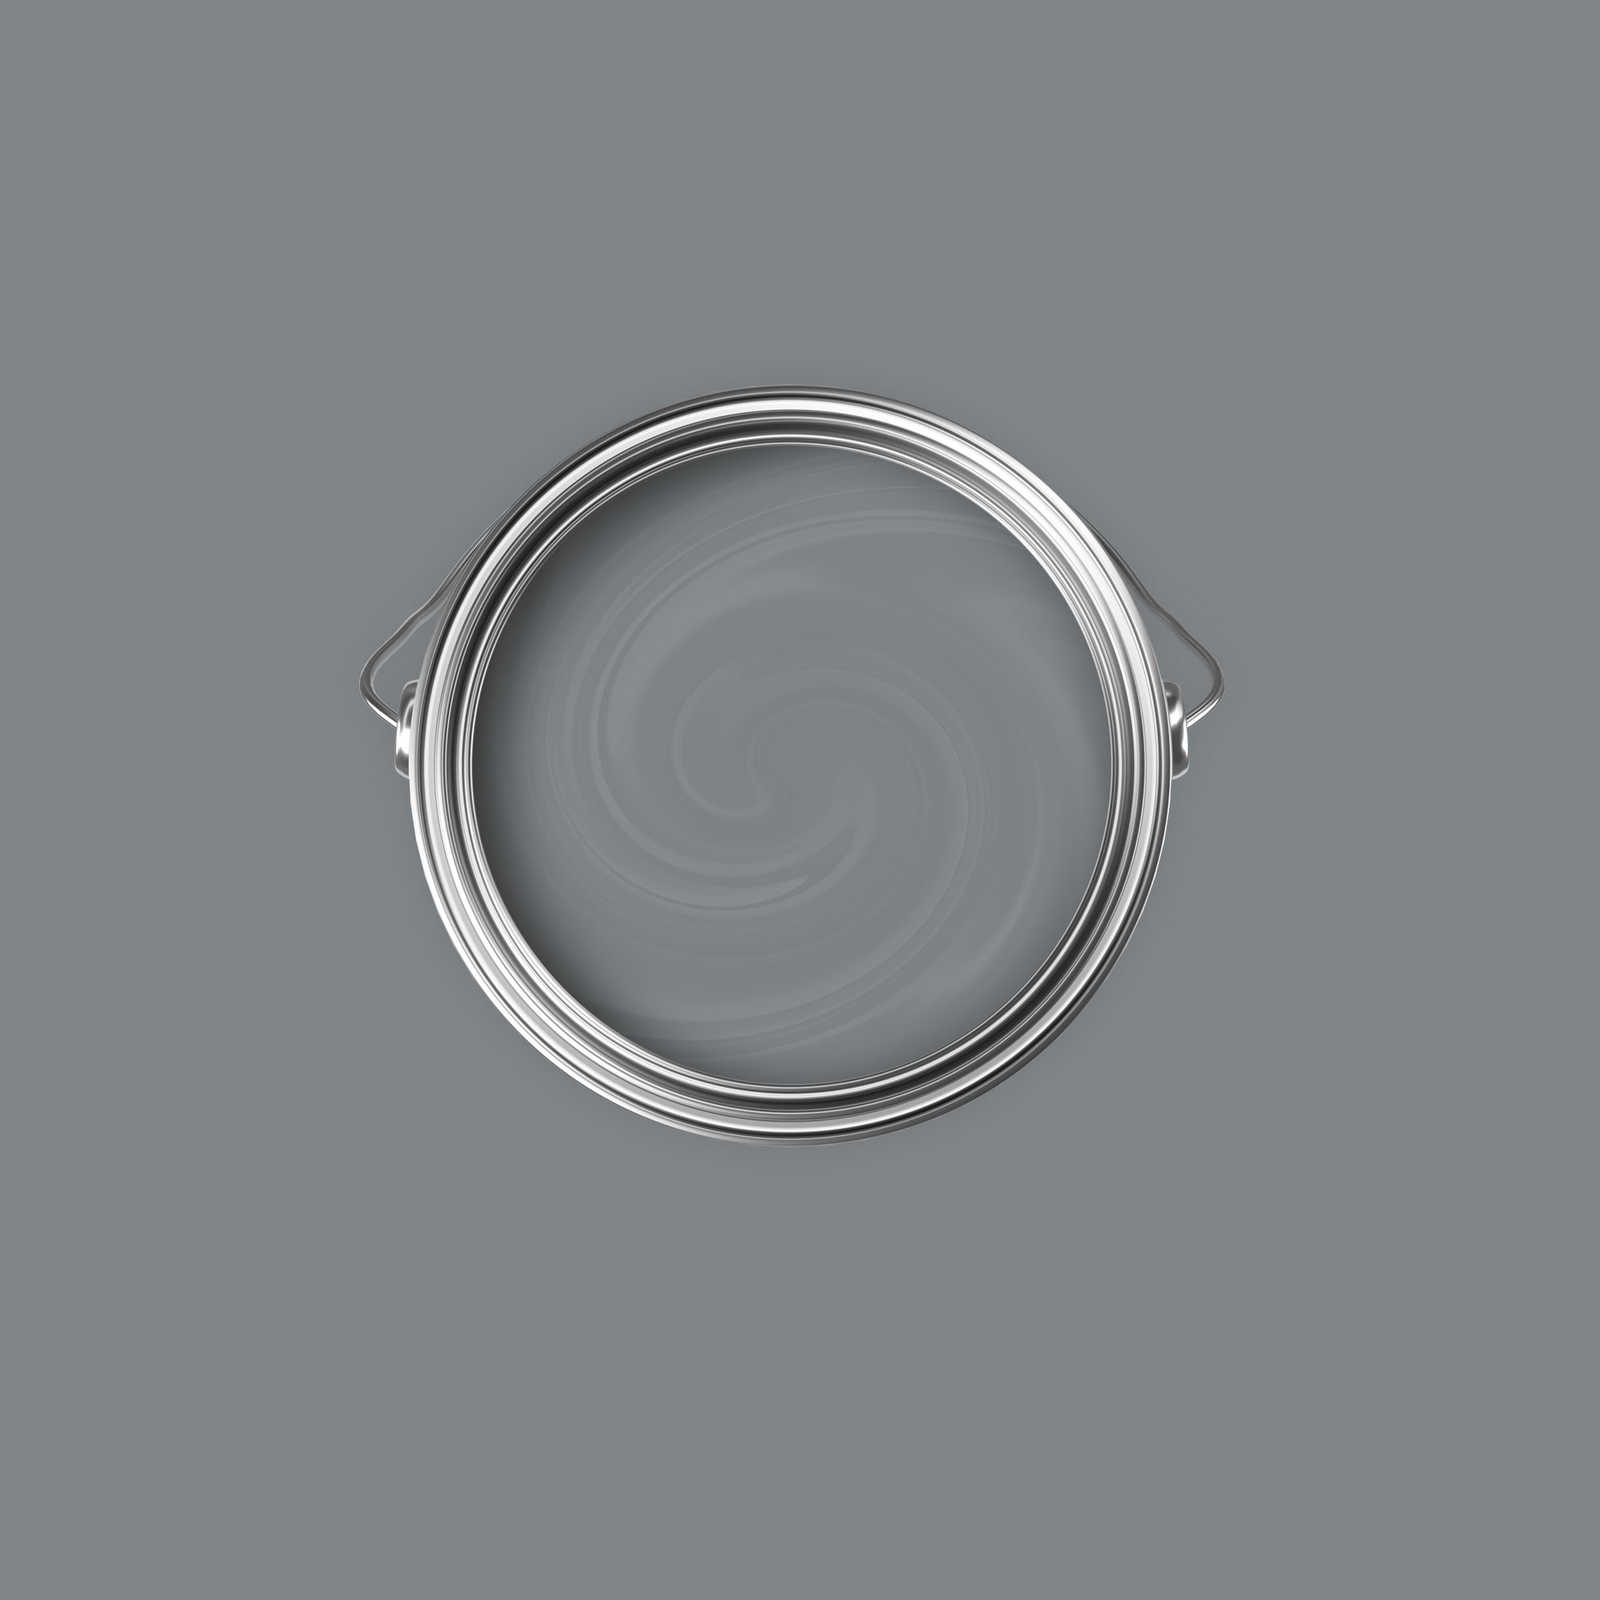             Premium Wandfarbe beruhigendes Betongrau »Industrial Grey« NW104 – 2,5 Liter
        